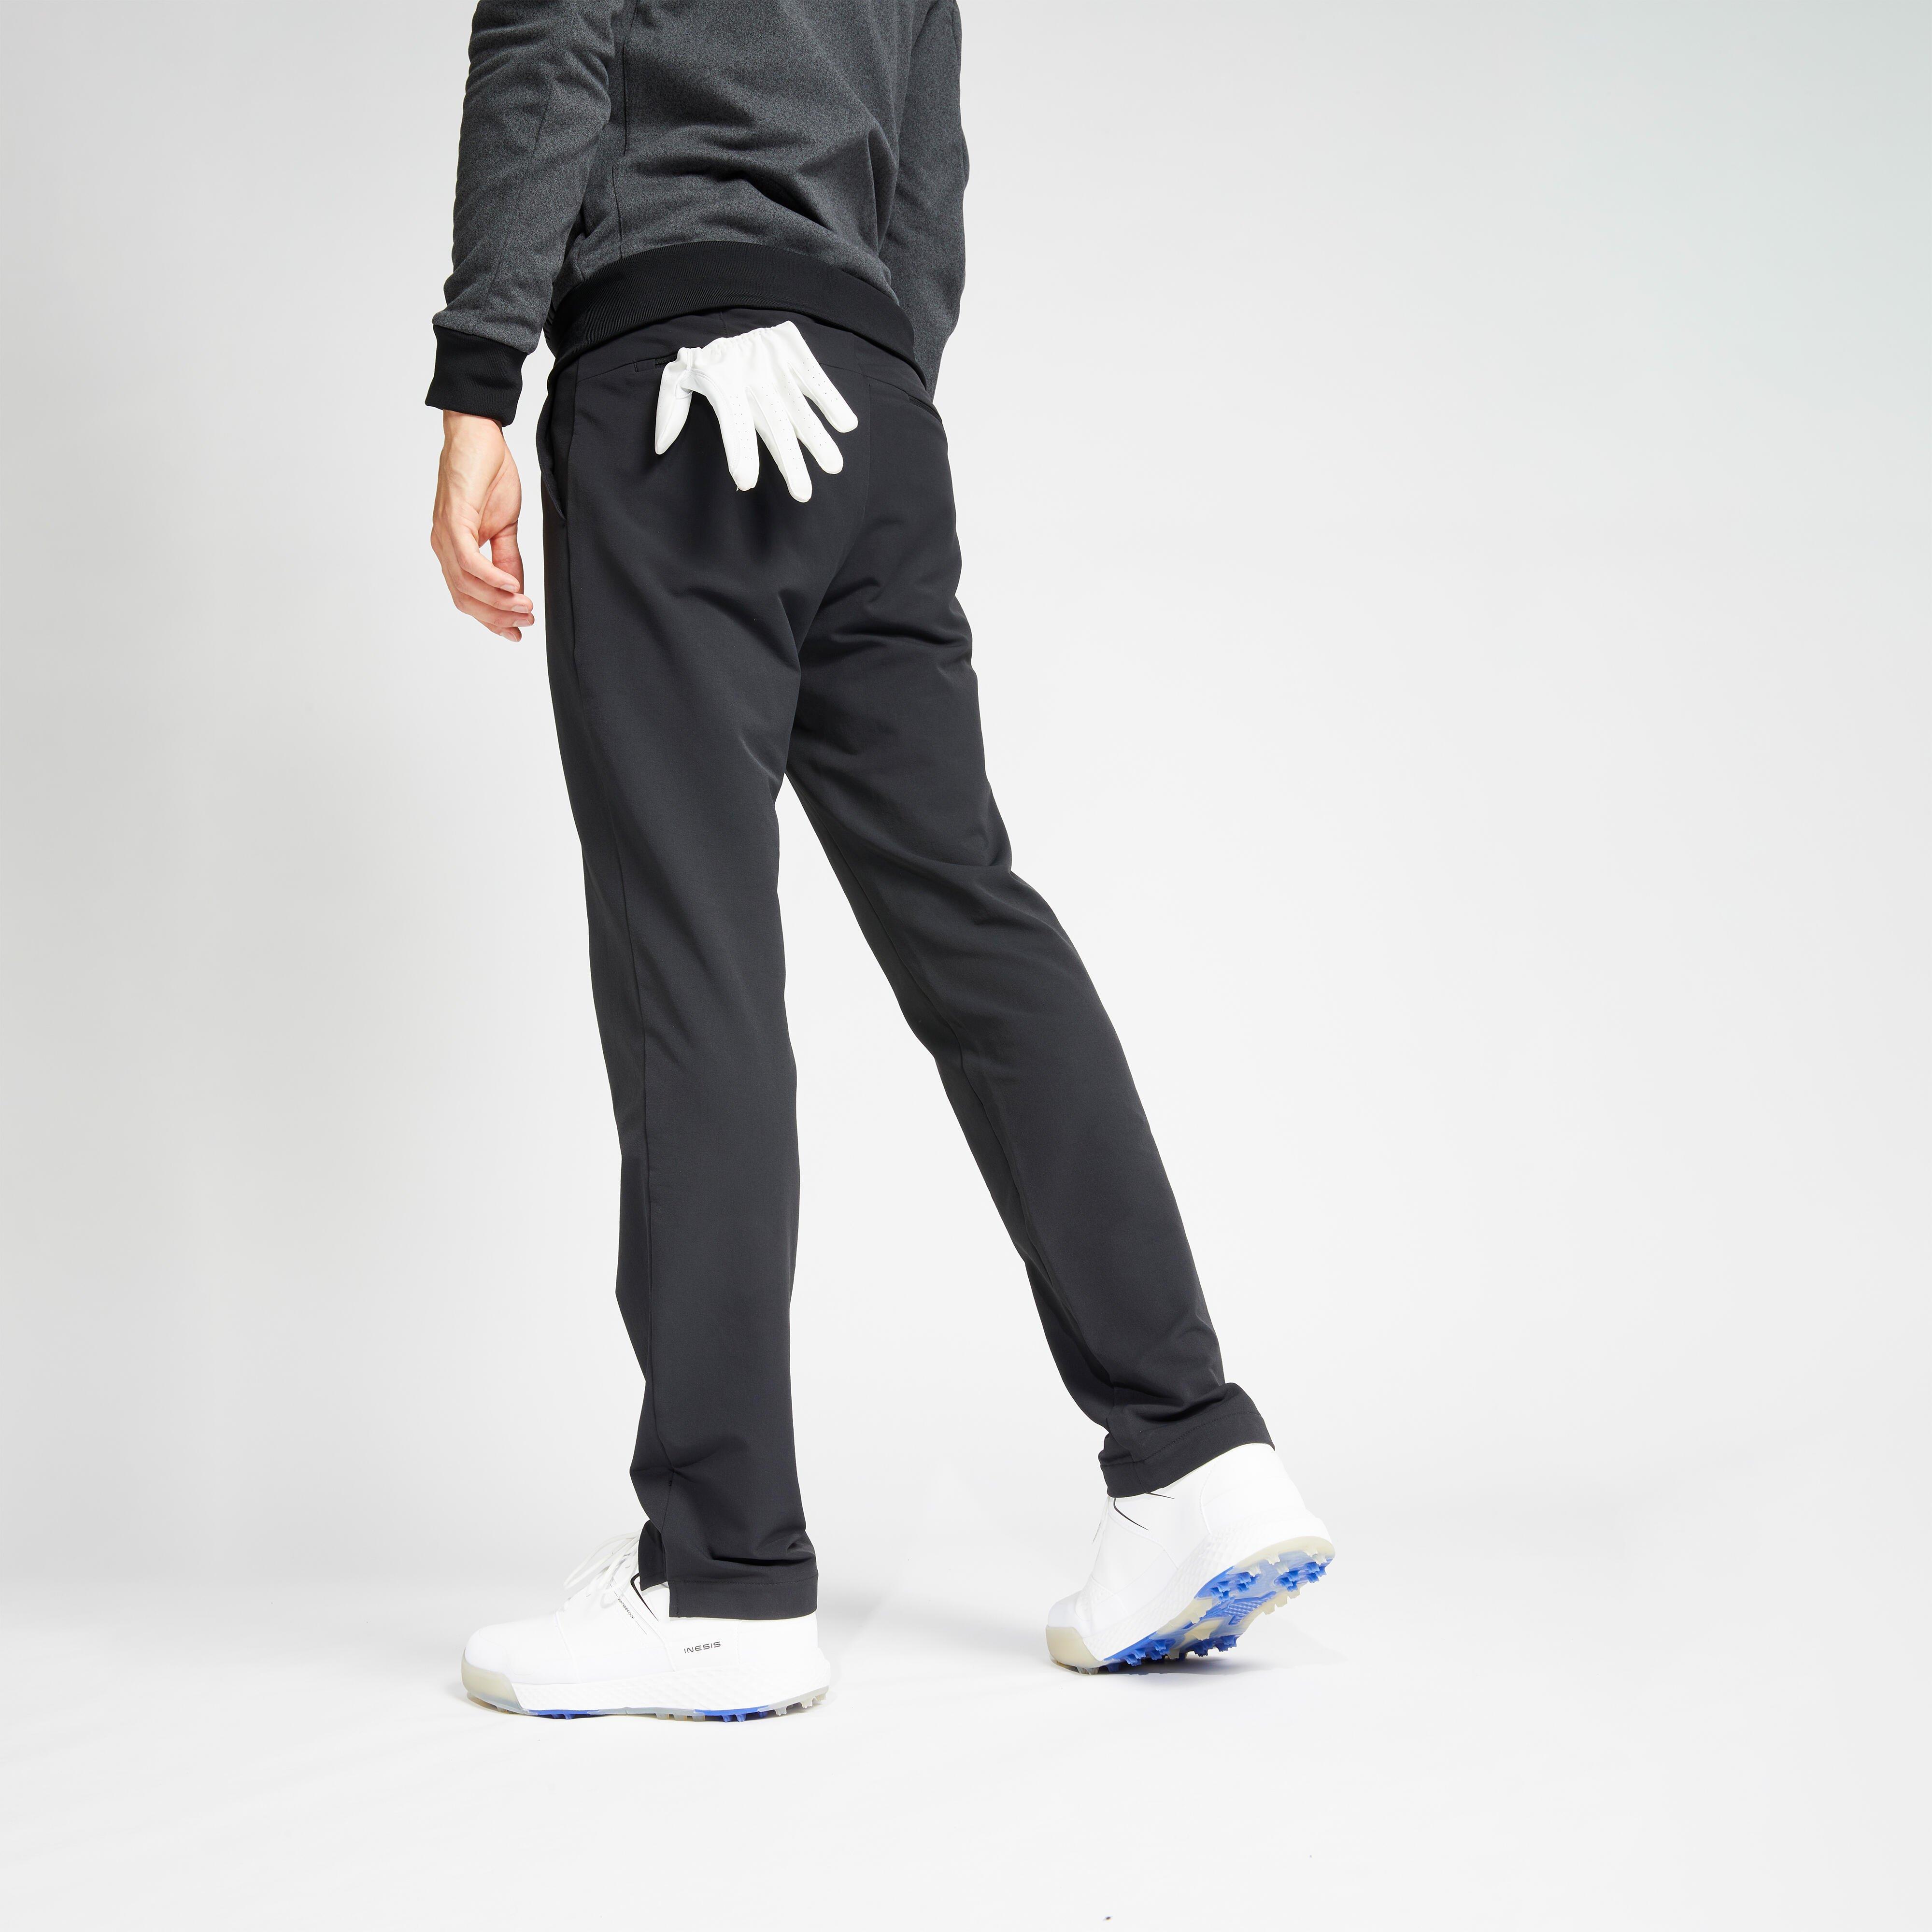 Inesis Men's Golf Trousers - Mw500 Beige @ Best Price Online | Jumia Kenya